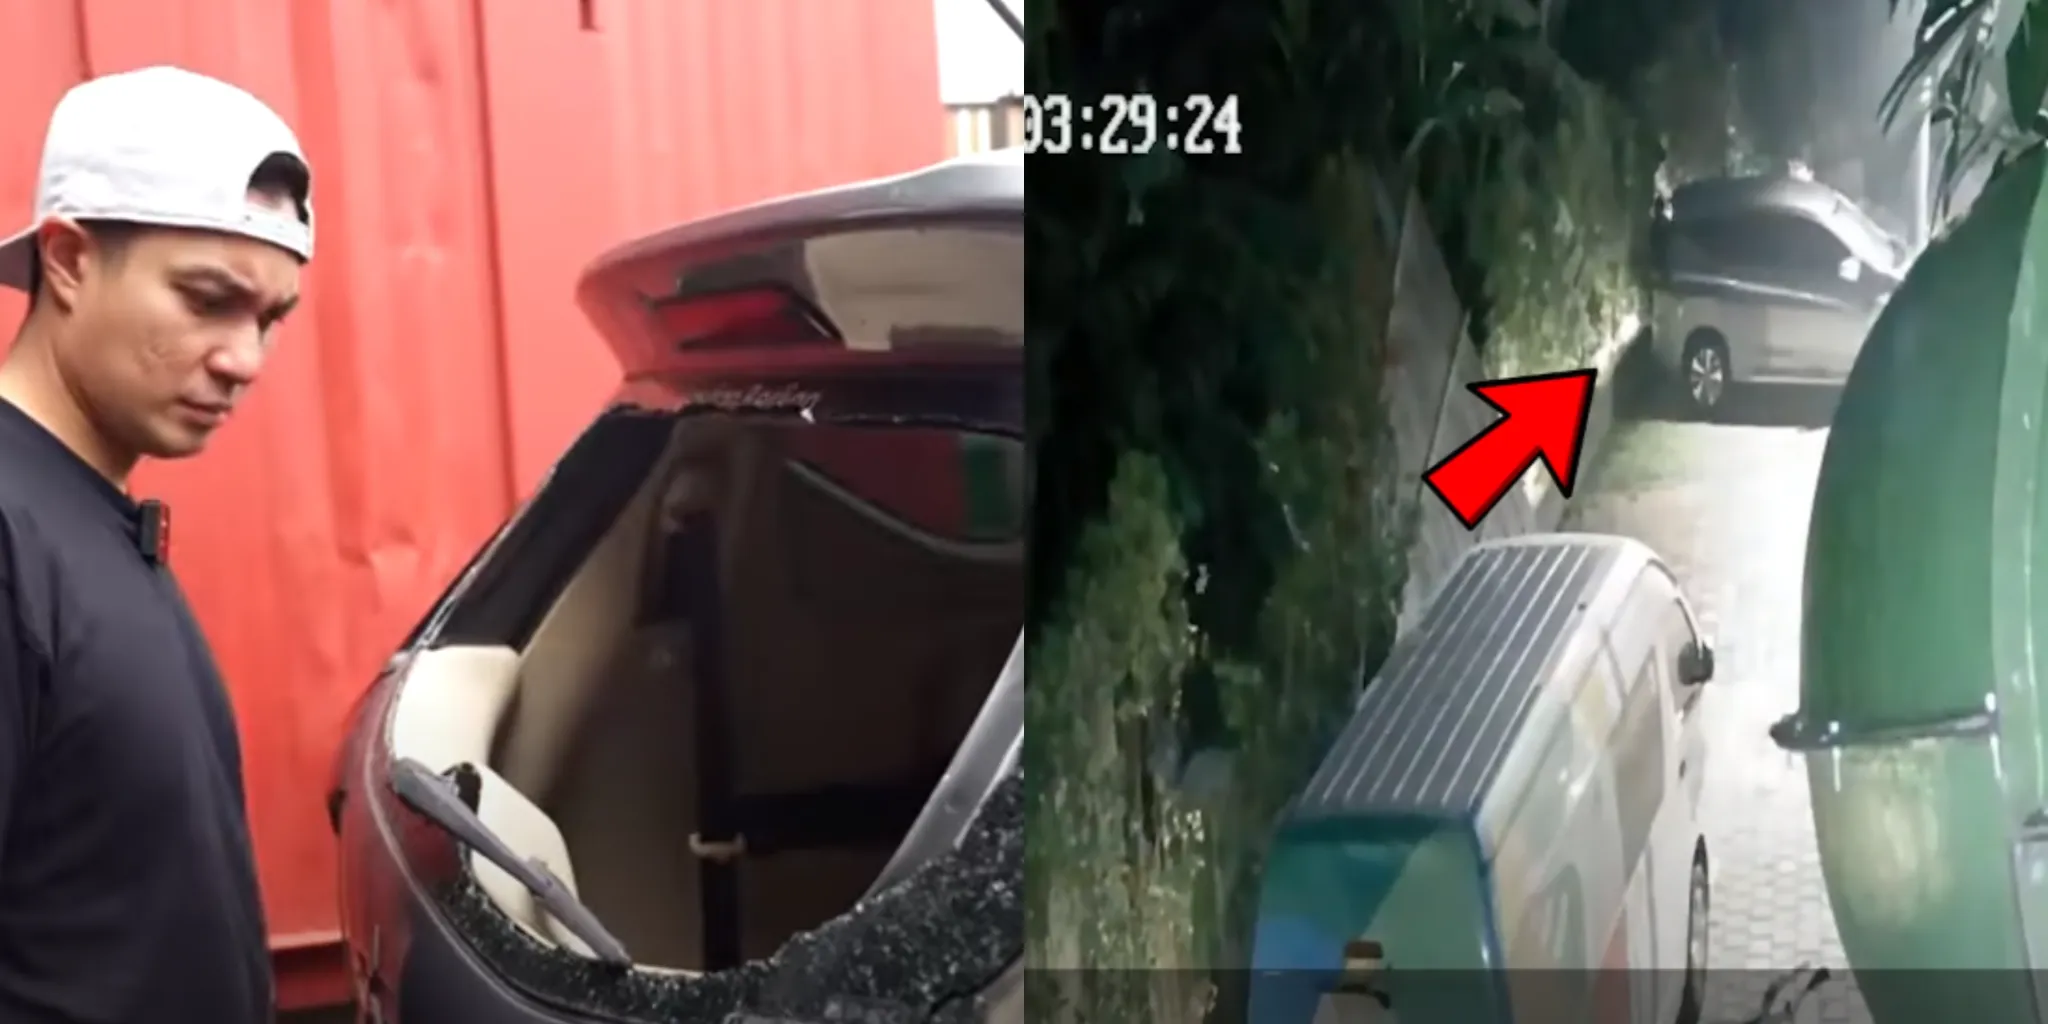 Maling Bobol Mobil Baim Wong, CCTV Merekam Pelakunya/ Kolase YouTube Baim Paula